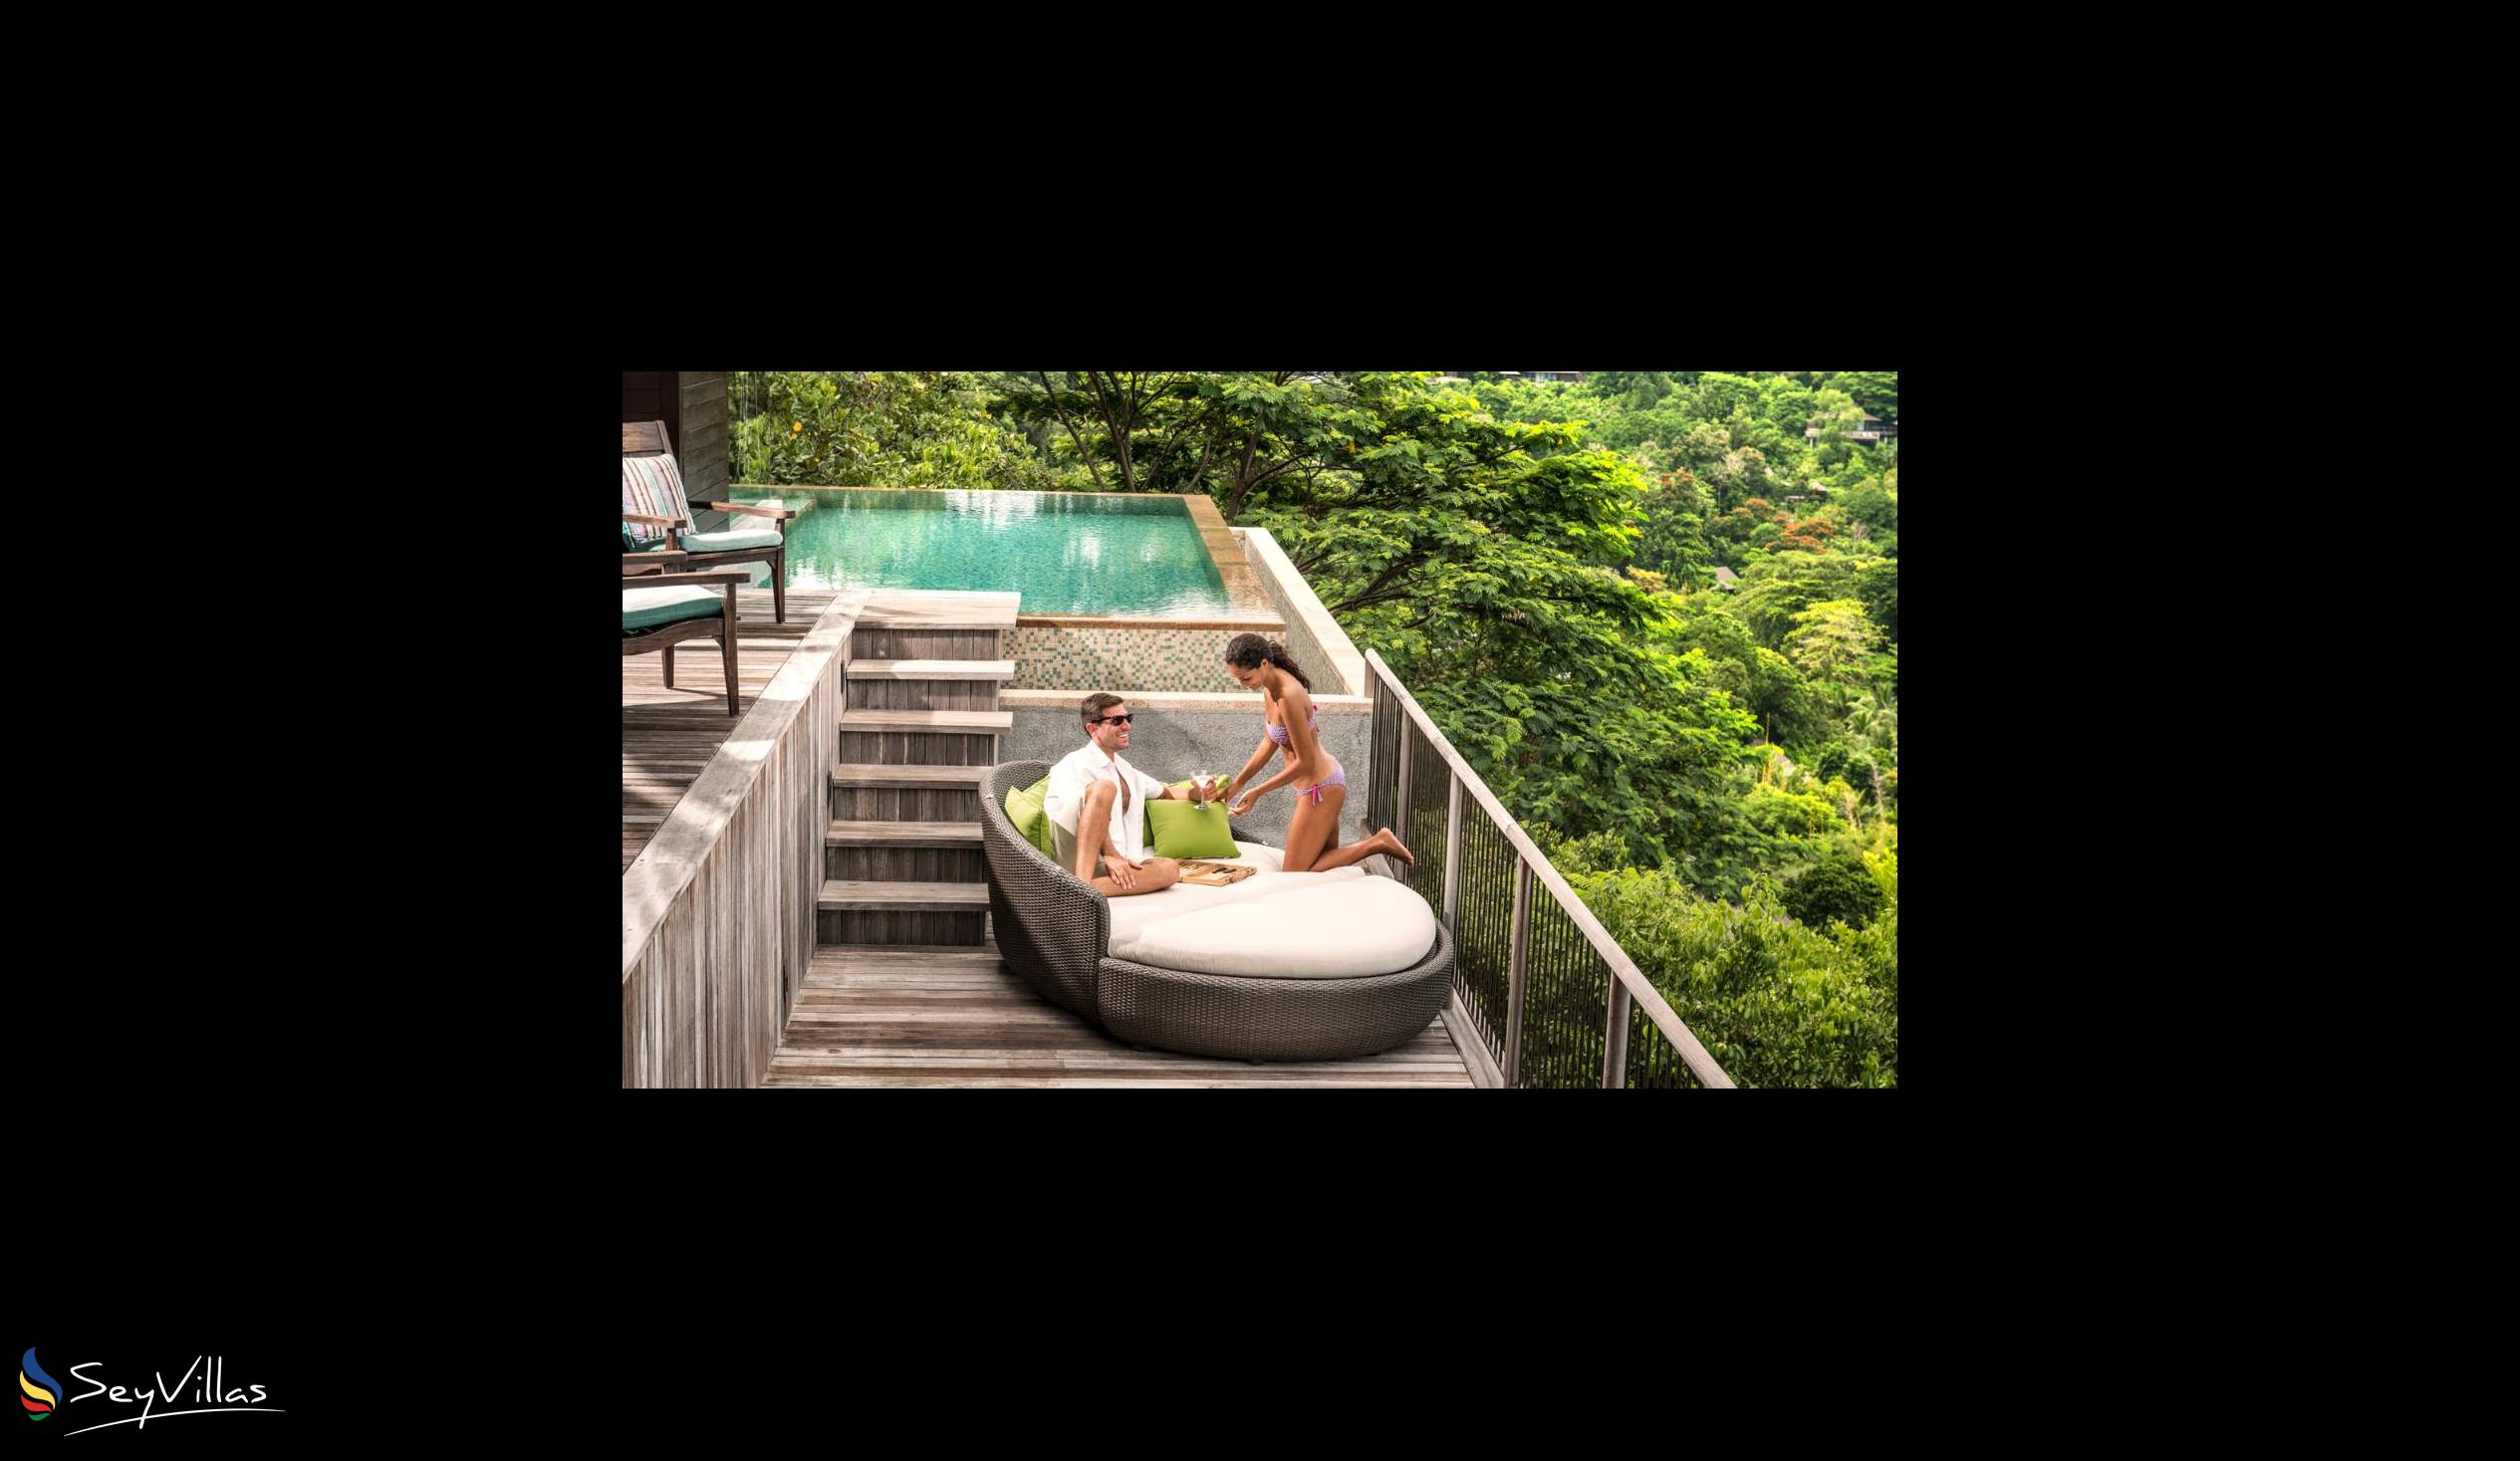 Photo 57: Four Seasons Resort - Serenity Villa - Mahé (Seychelles)